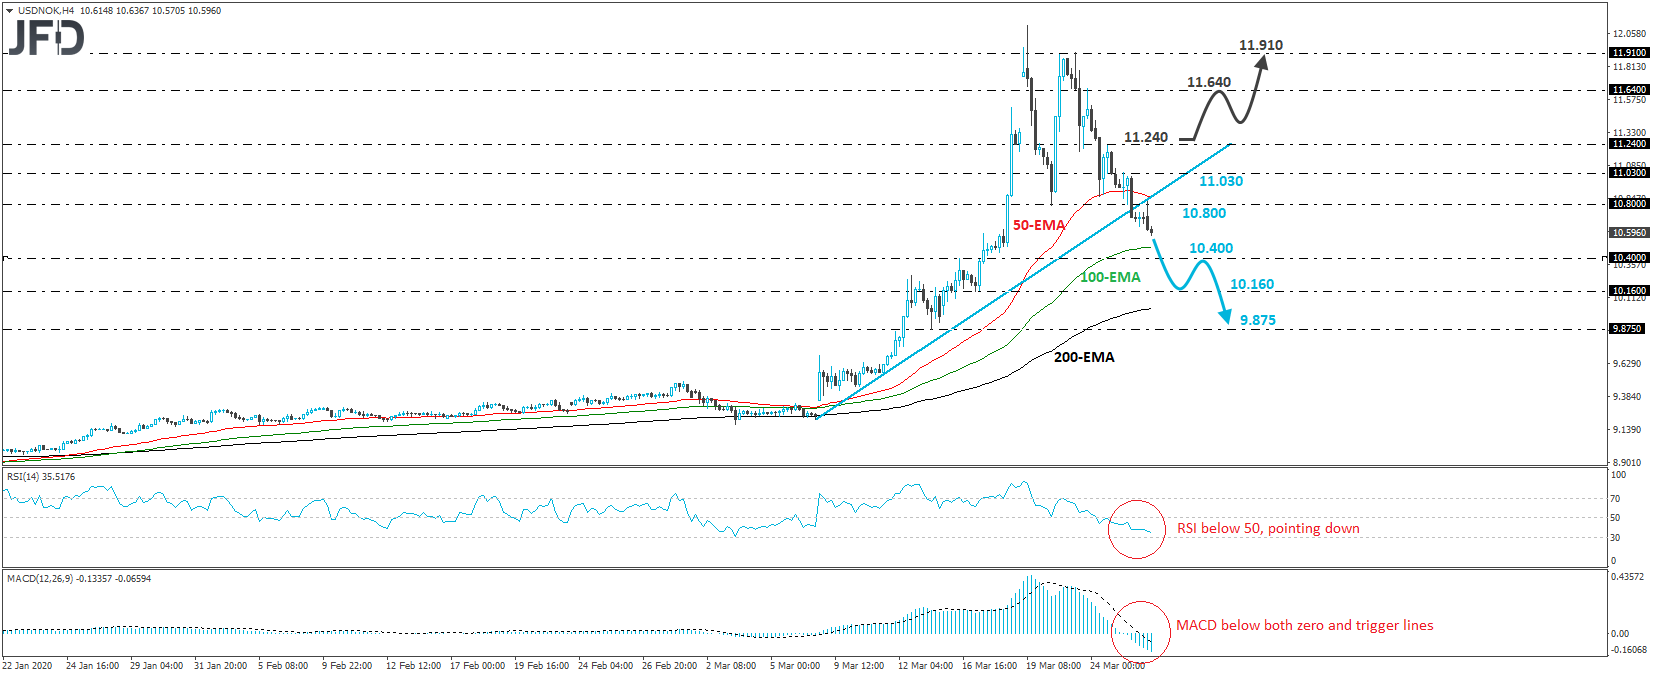 USD/NOK 4-hour chart technical analysis